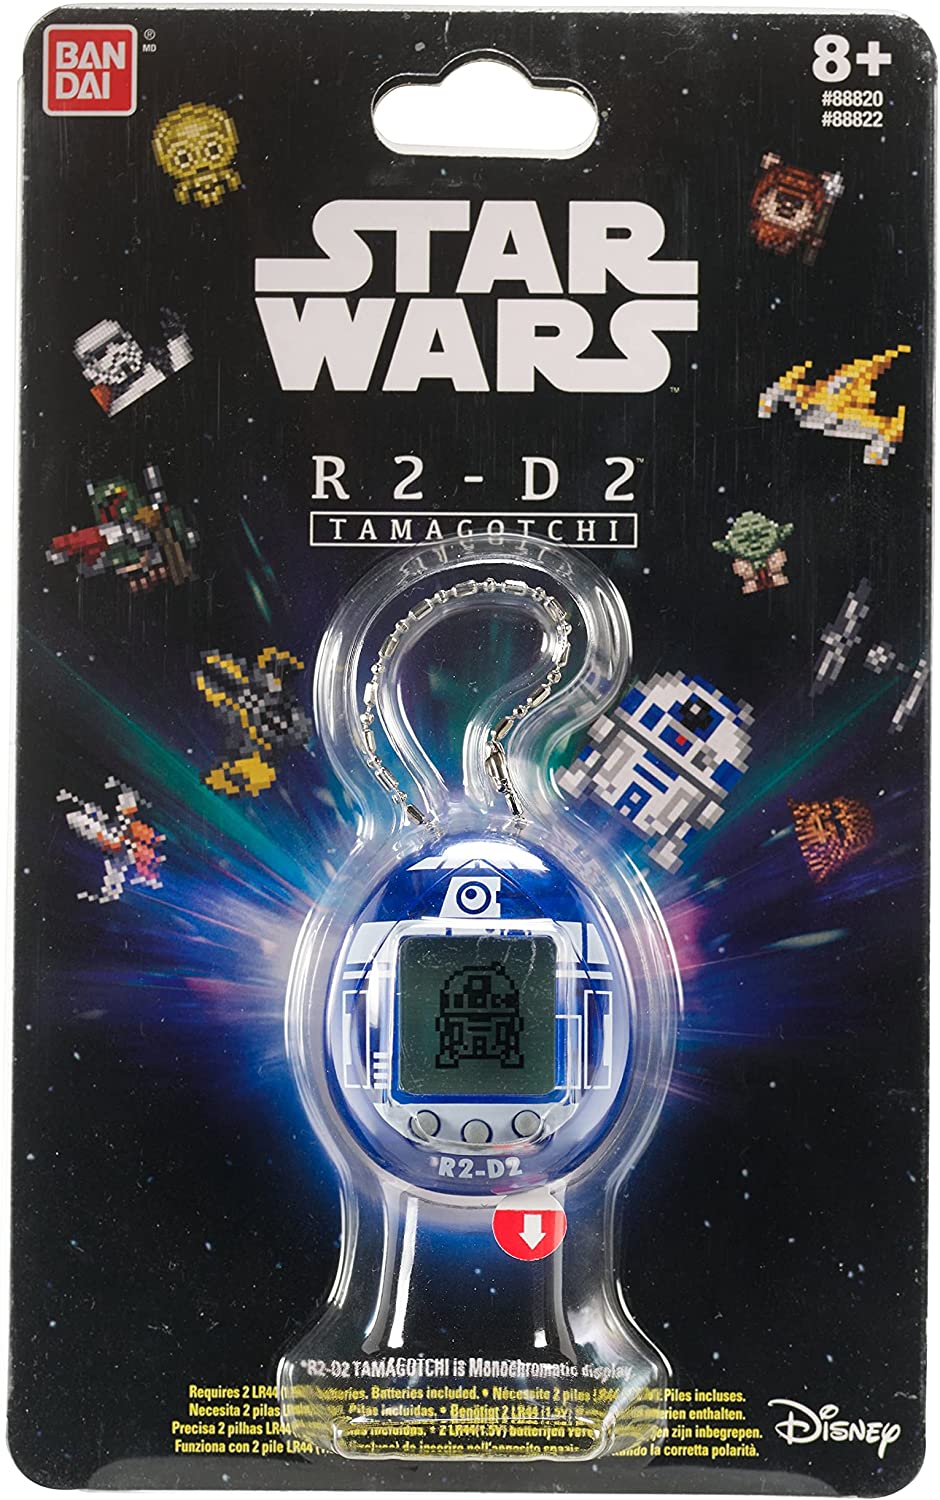 TAMAGOTCHI 88822 Star Wars R2D2 Virtual Pet Droid with Mini-Games, Animated Clip